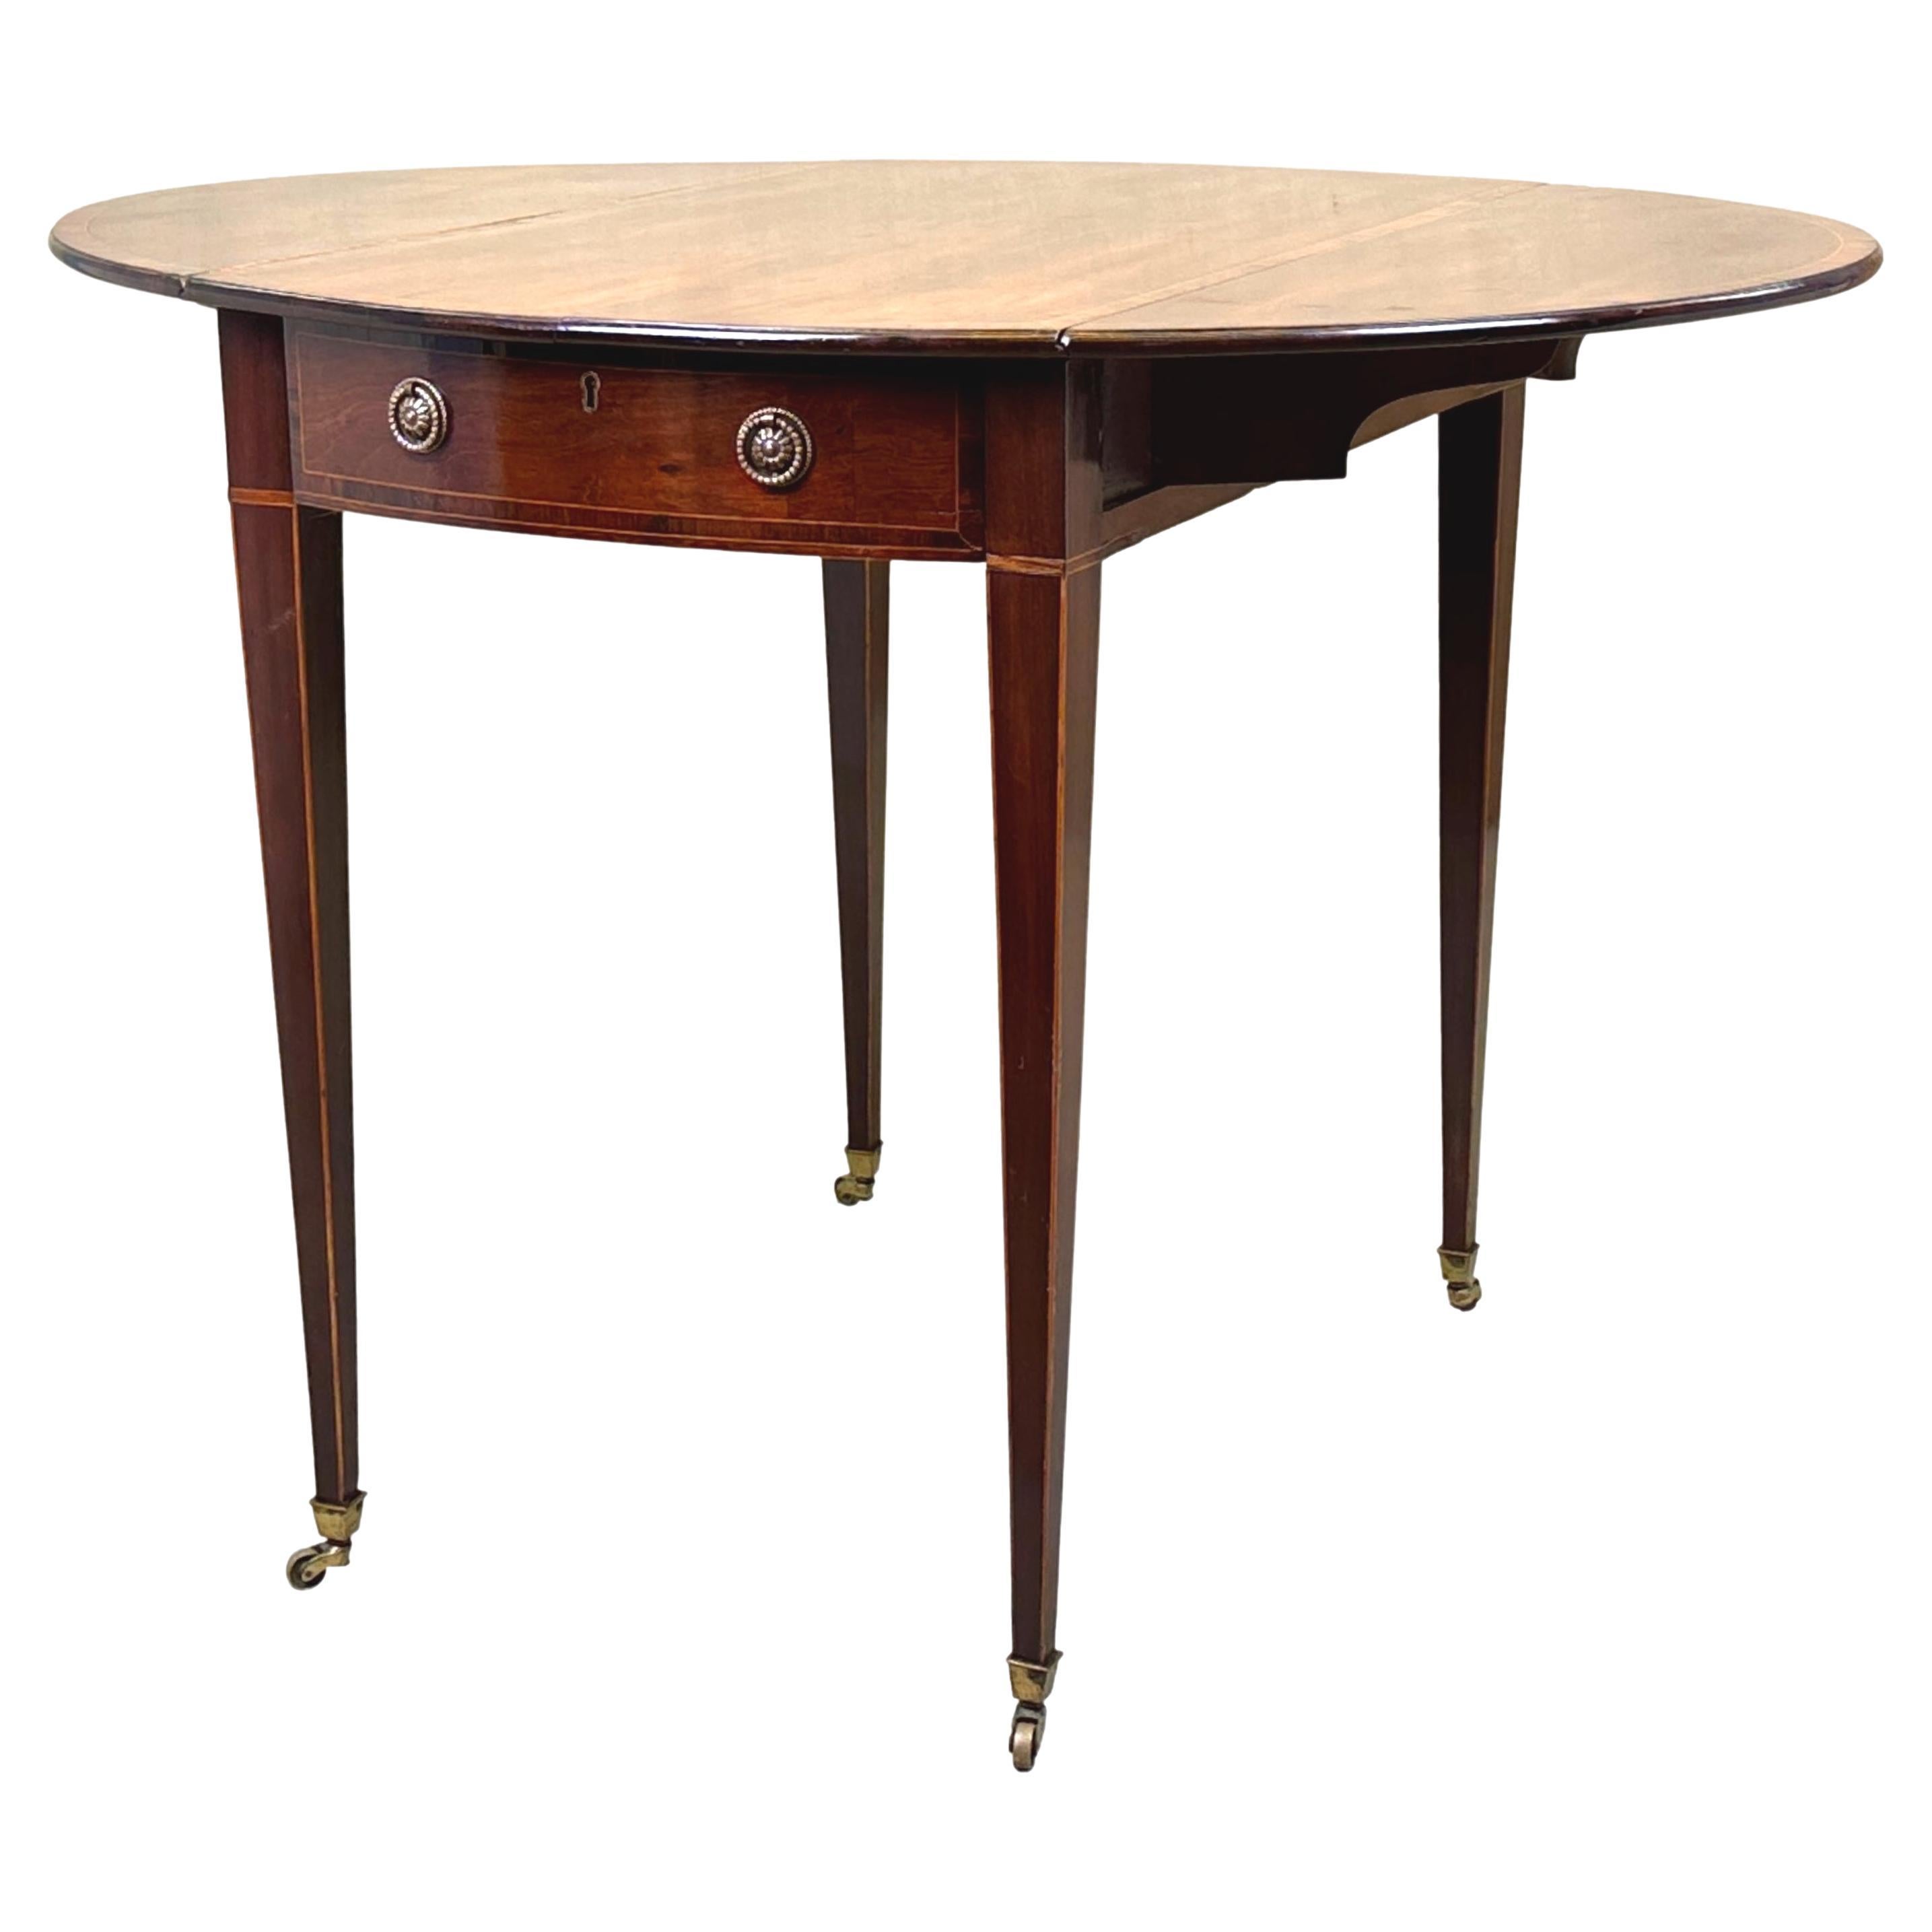 Ovaler Pembroke-Tisch aus Mahagoni aus dem 18. Jahrhundert